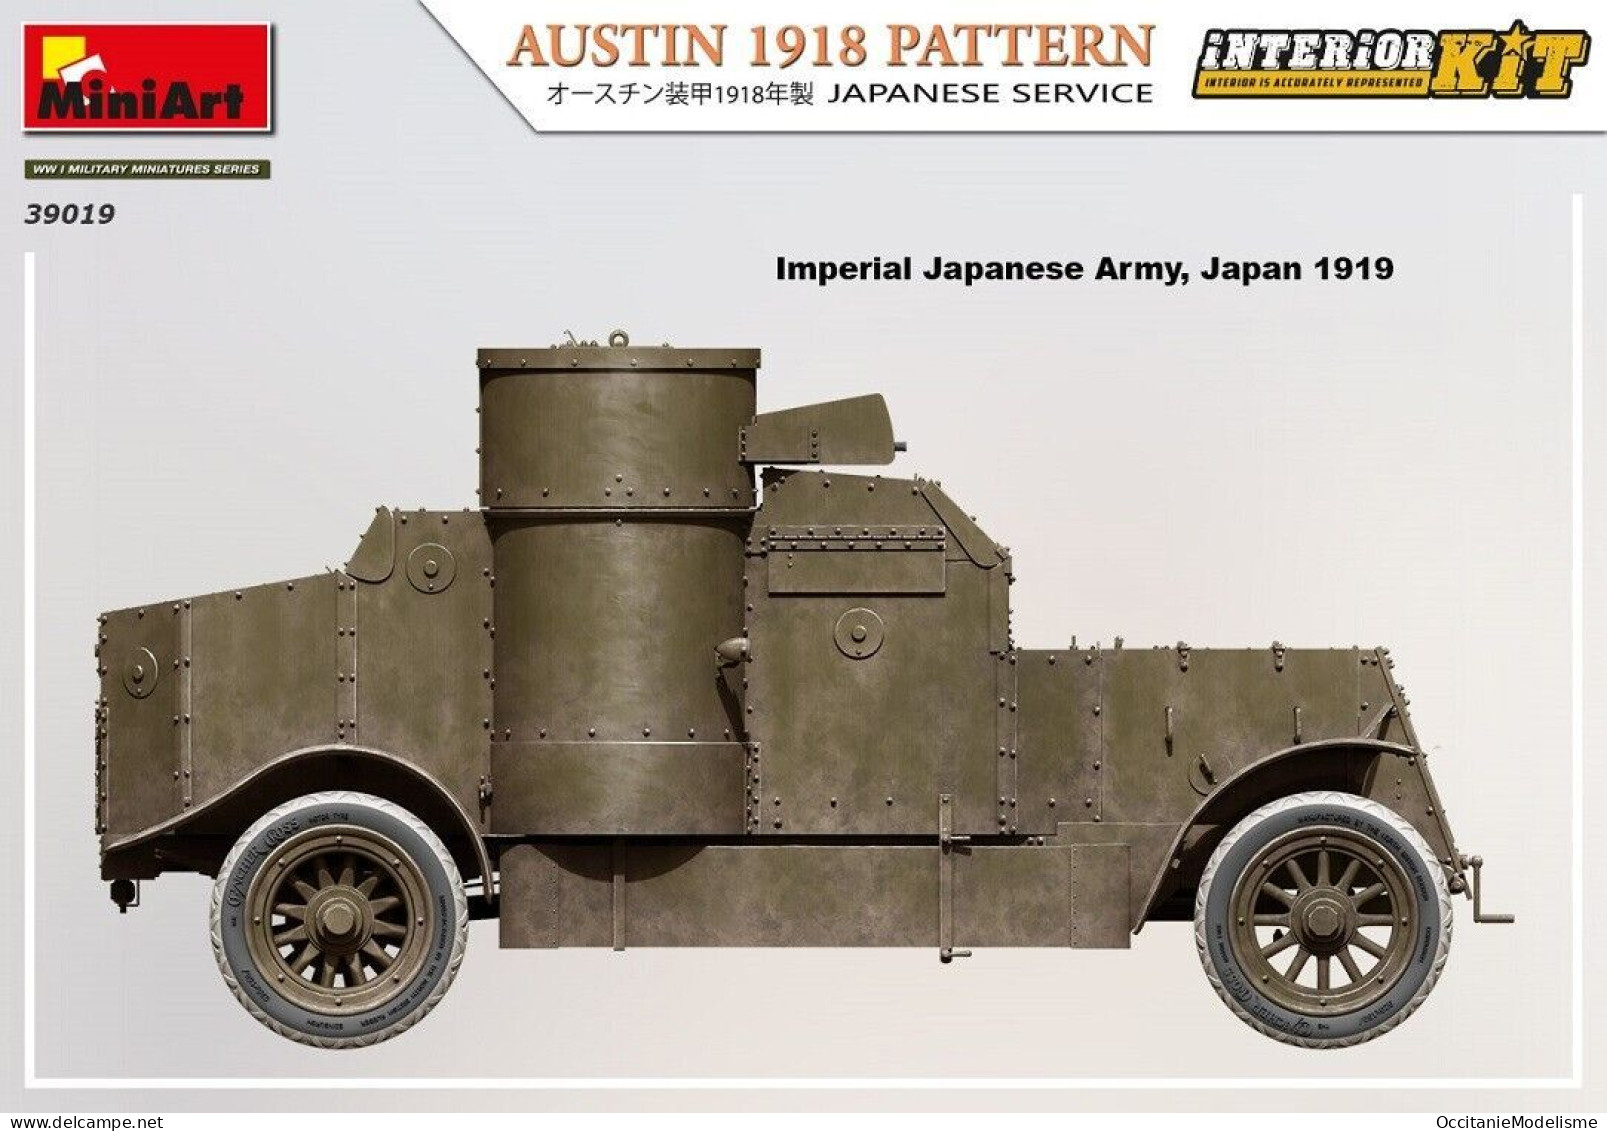 Miniart - AUSTIN 1918 PATTERN Japanese Service maquette kit plastique réf. 39019 Neuf NBO 1/35